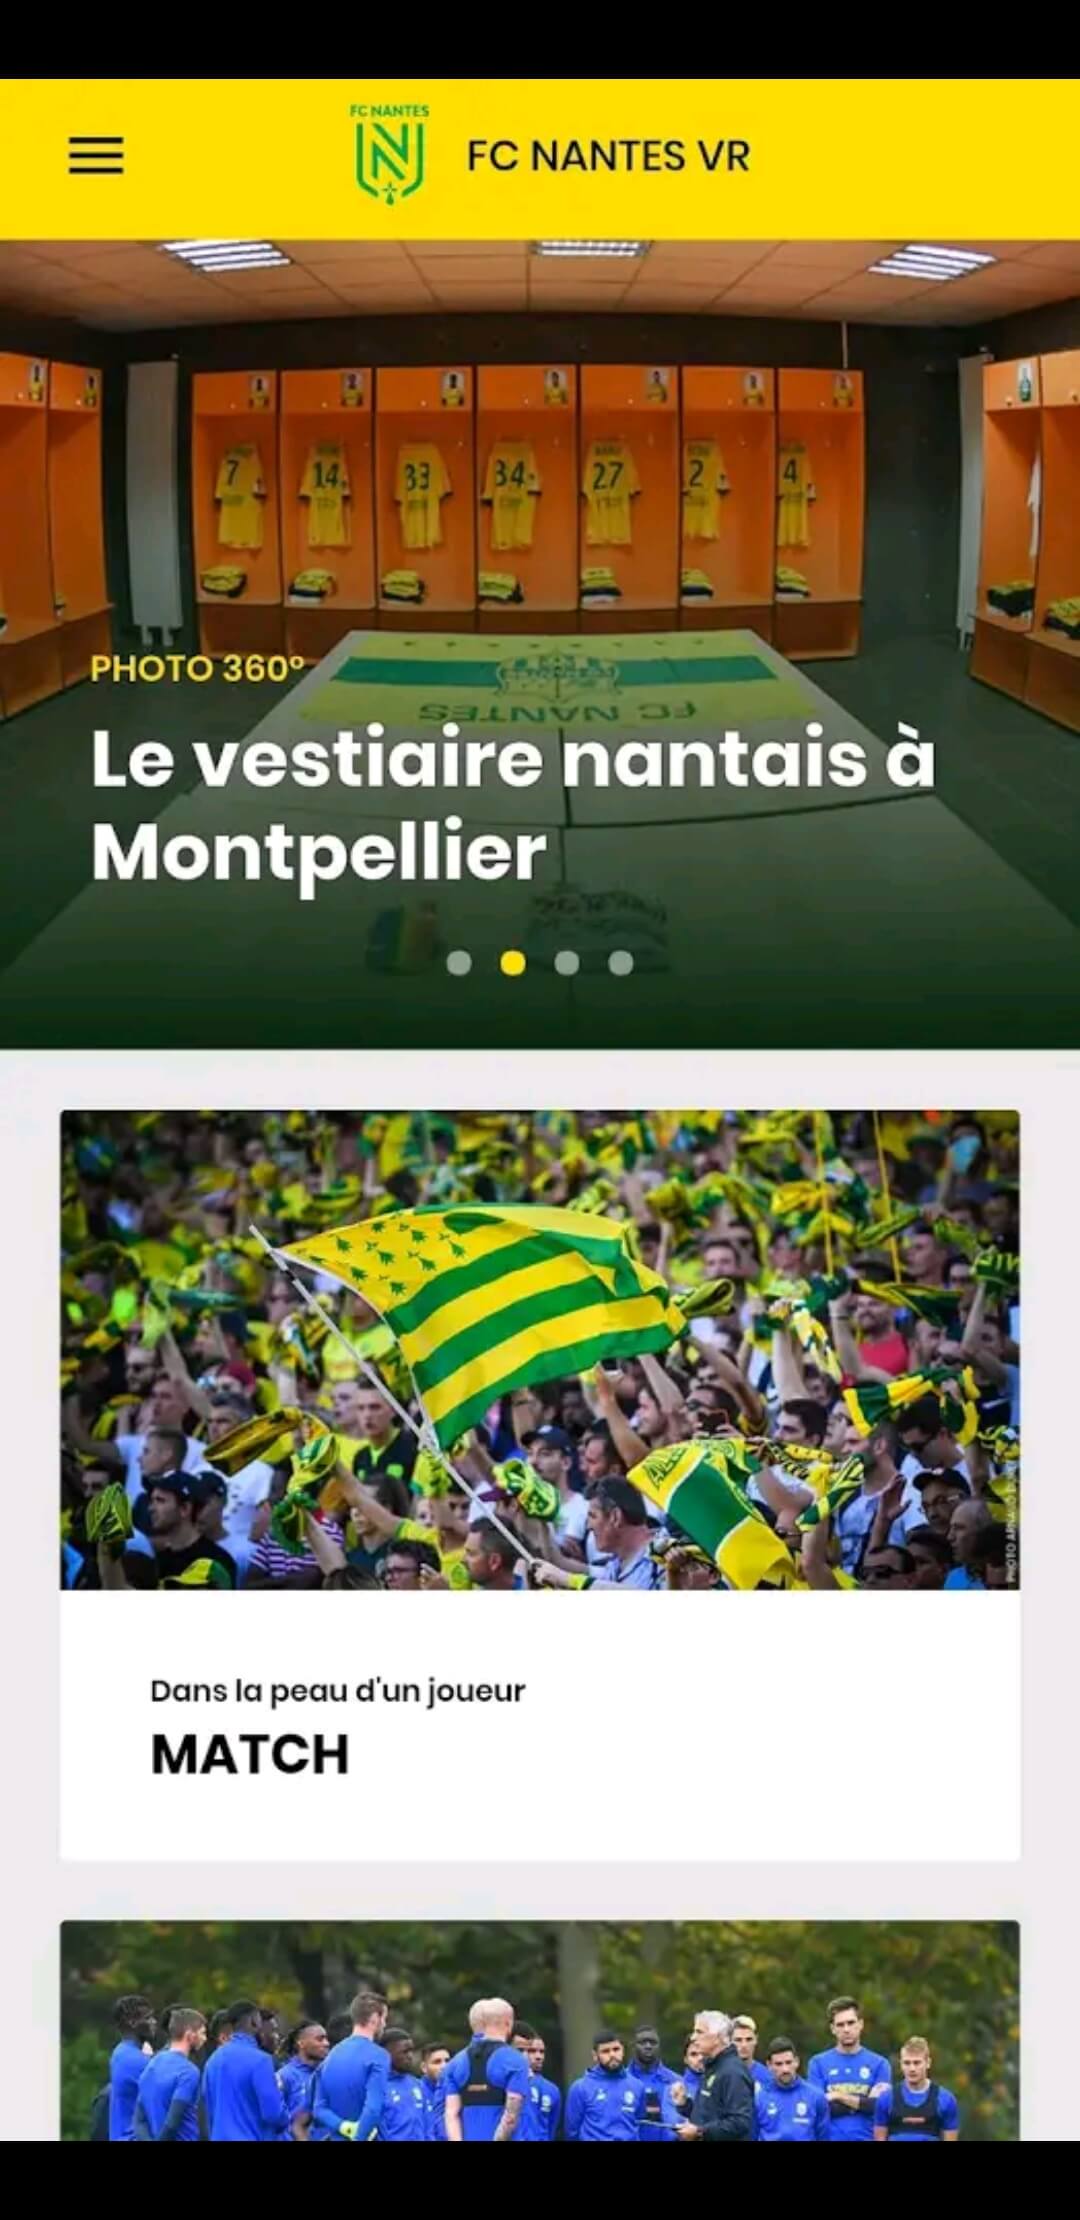 Fc Nantes vr google play 2.jpg (168 KB)